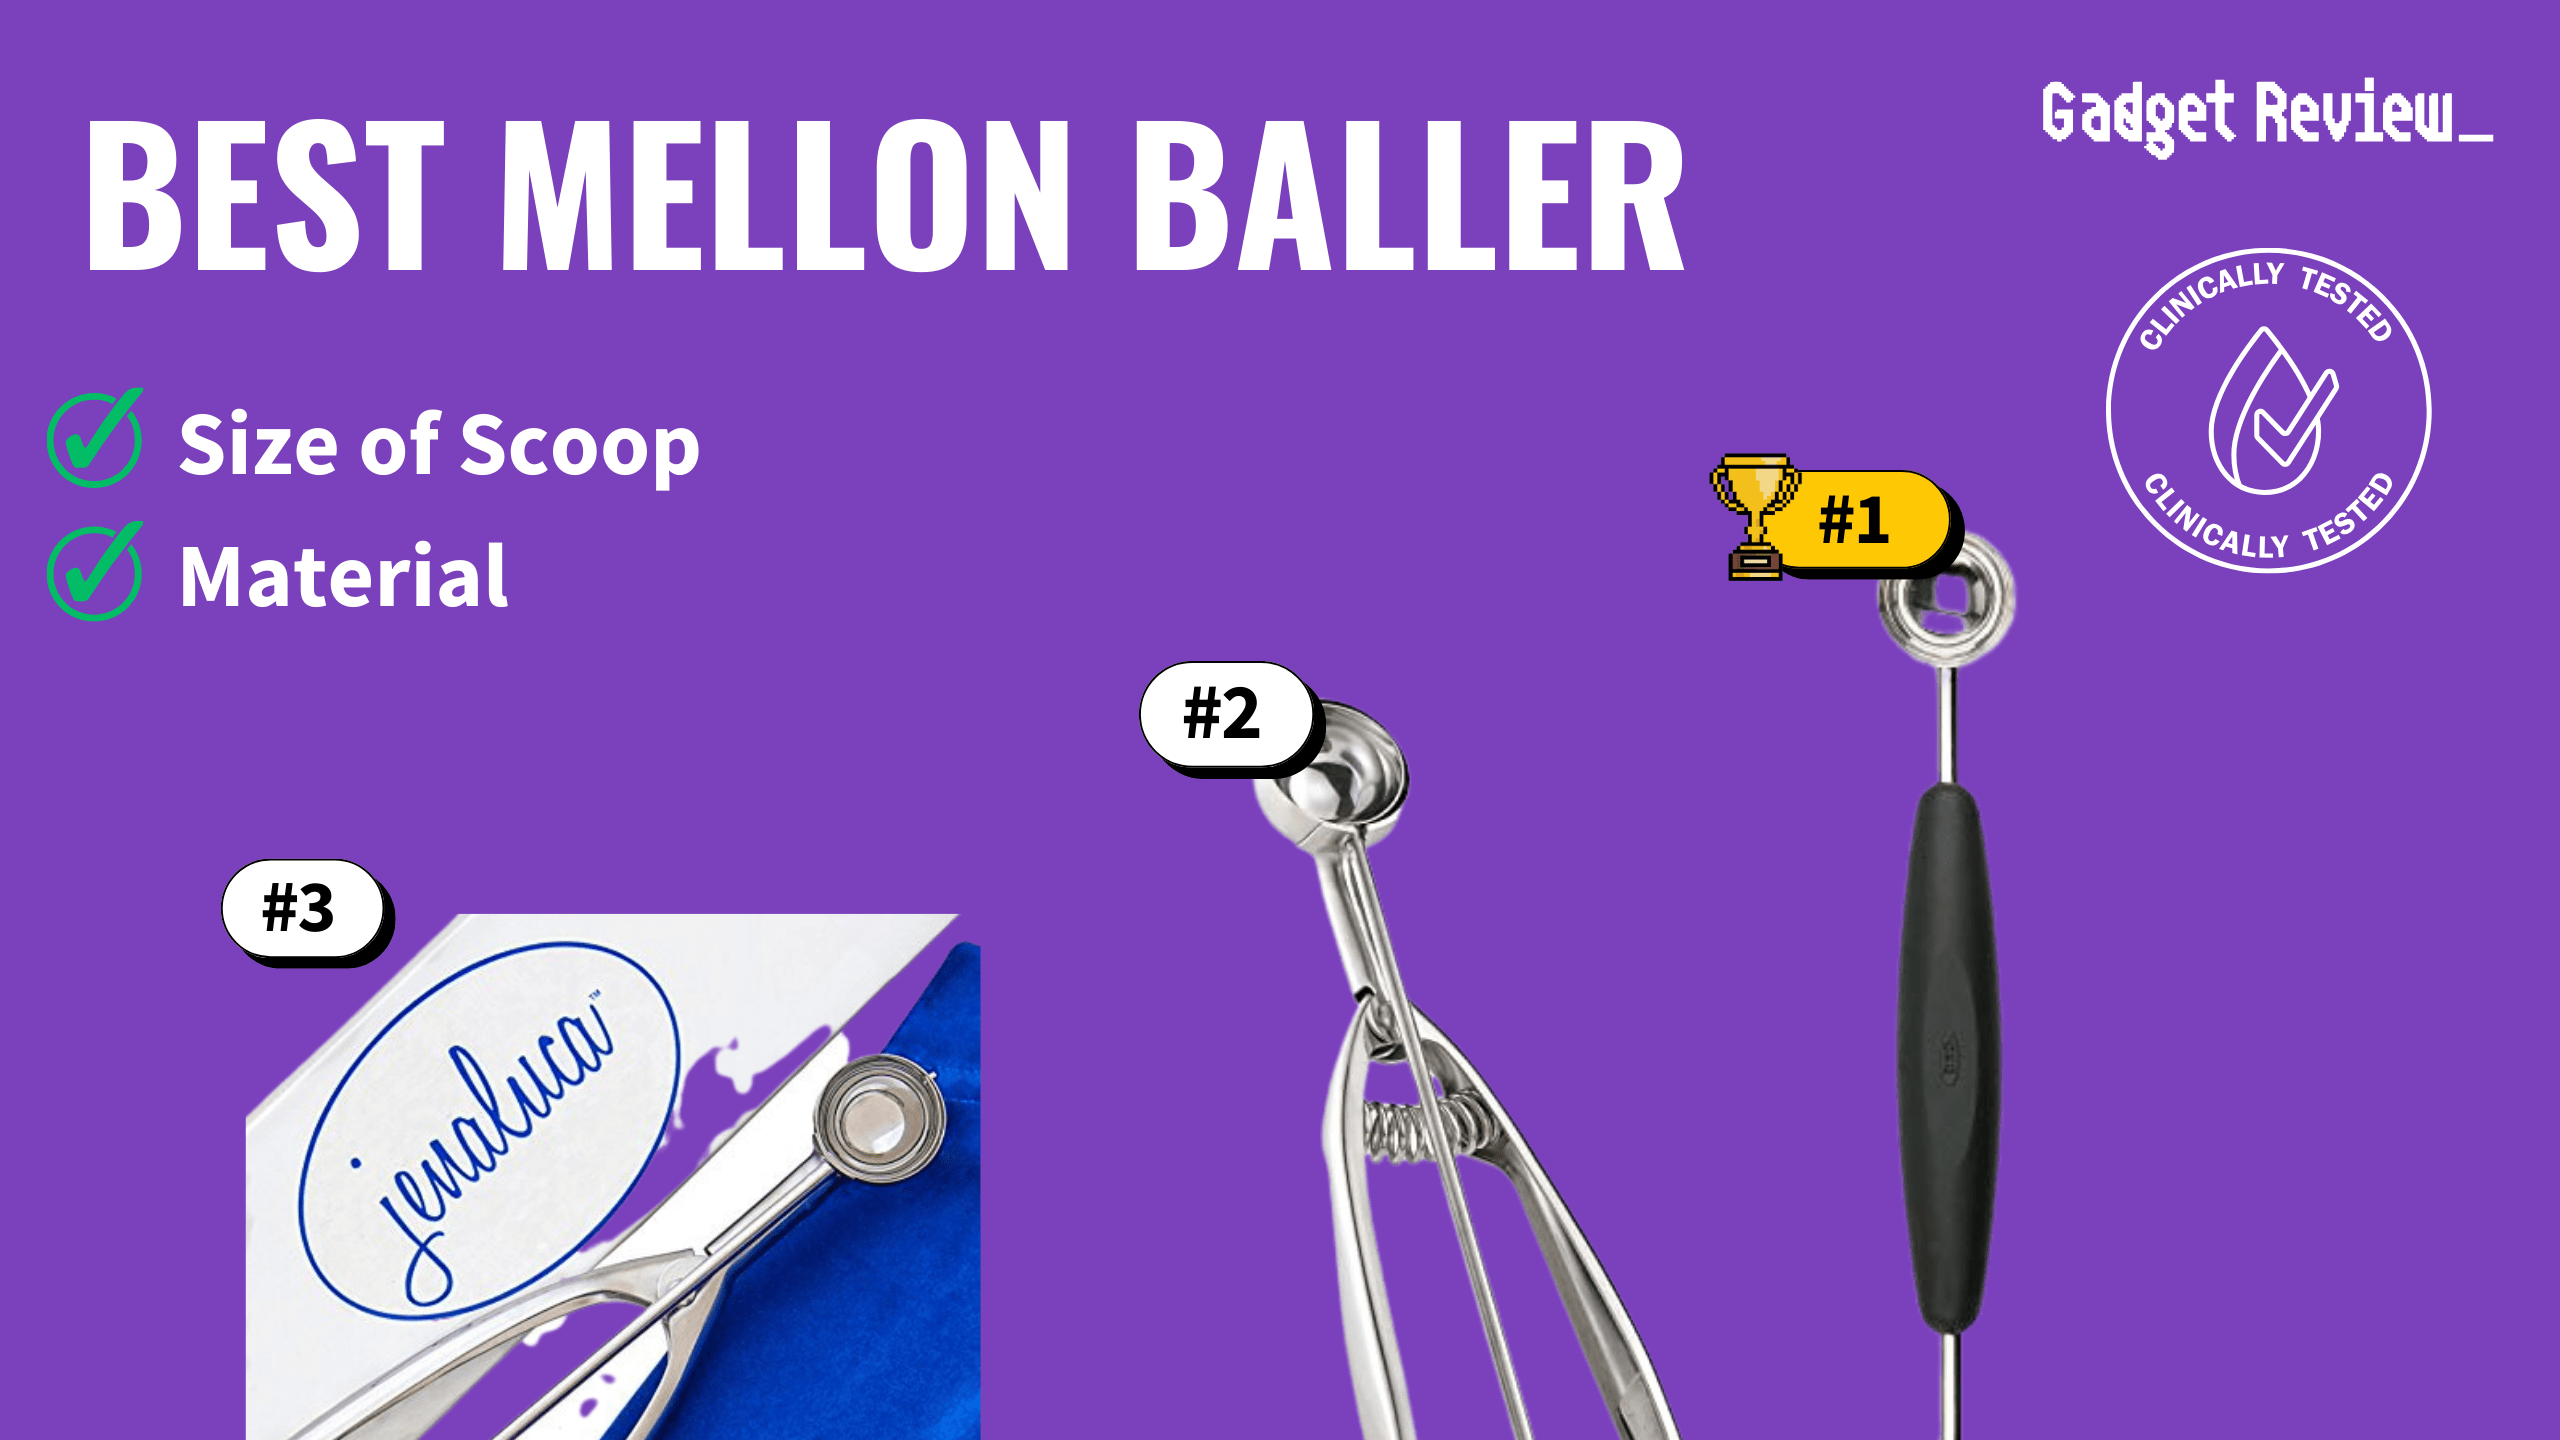 Norpro Double Melon Baller - Easily Scoop Decorative Balls of